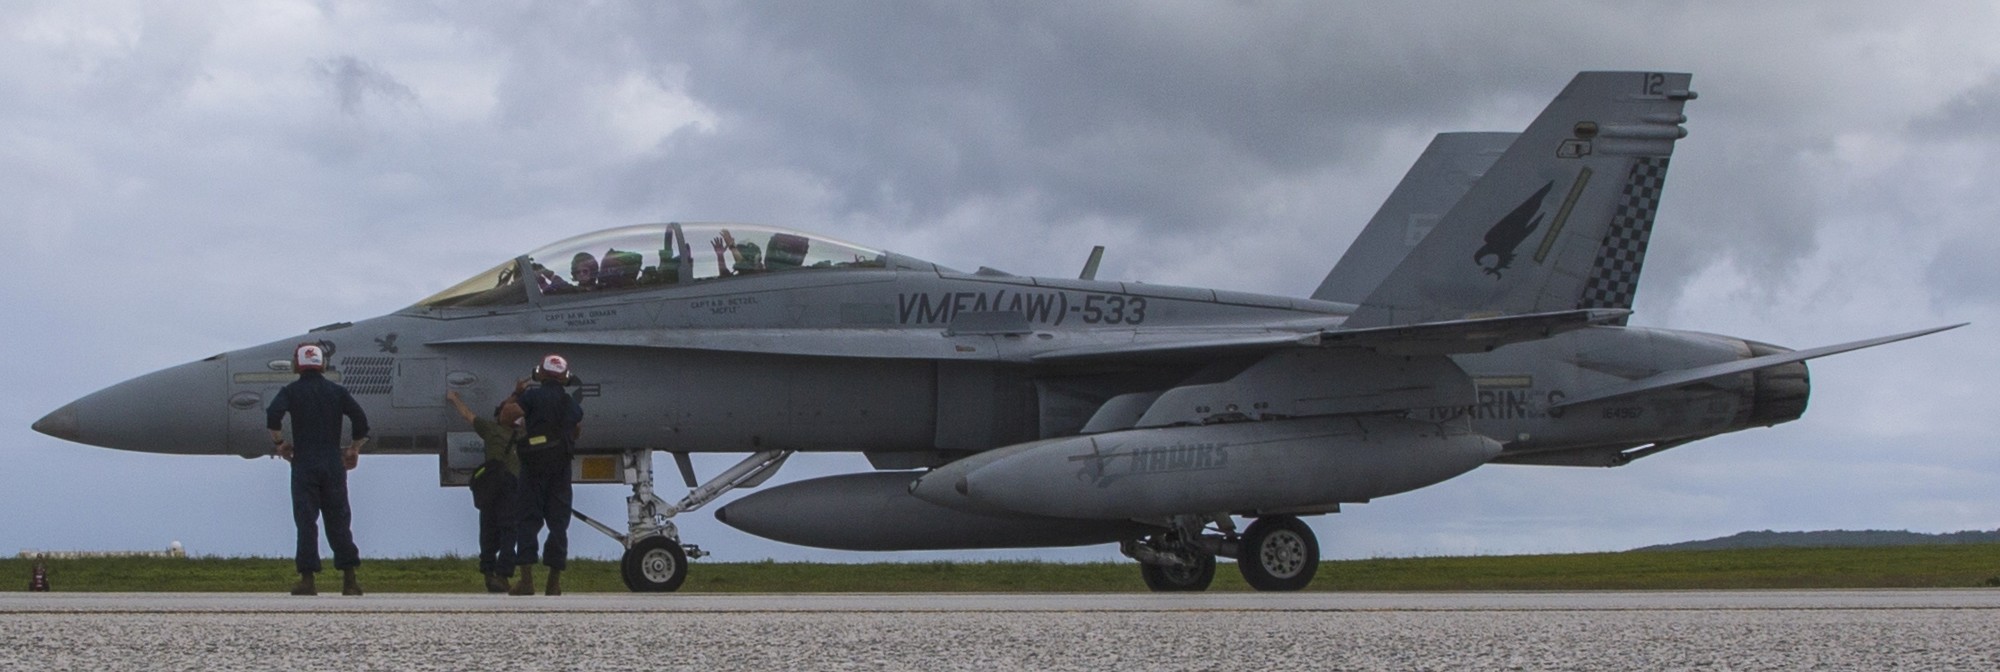 vmfa(aw)-533 hawks marine fighter attack squadron usmc f/a-18d hornet 60